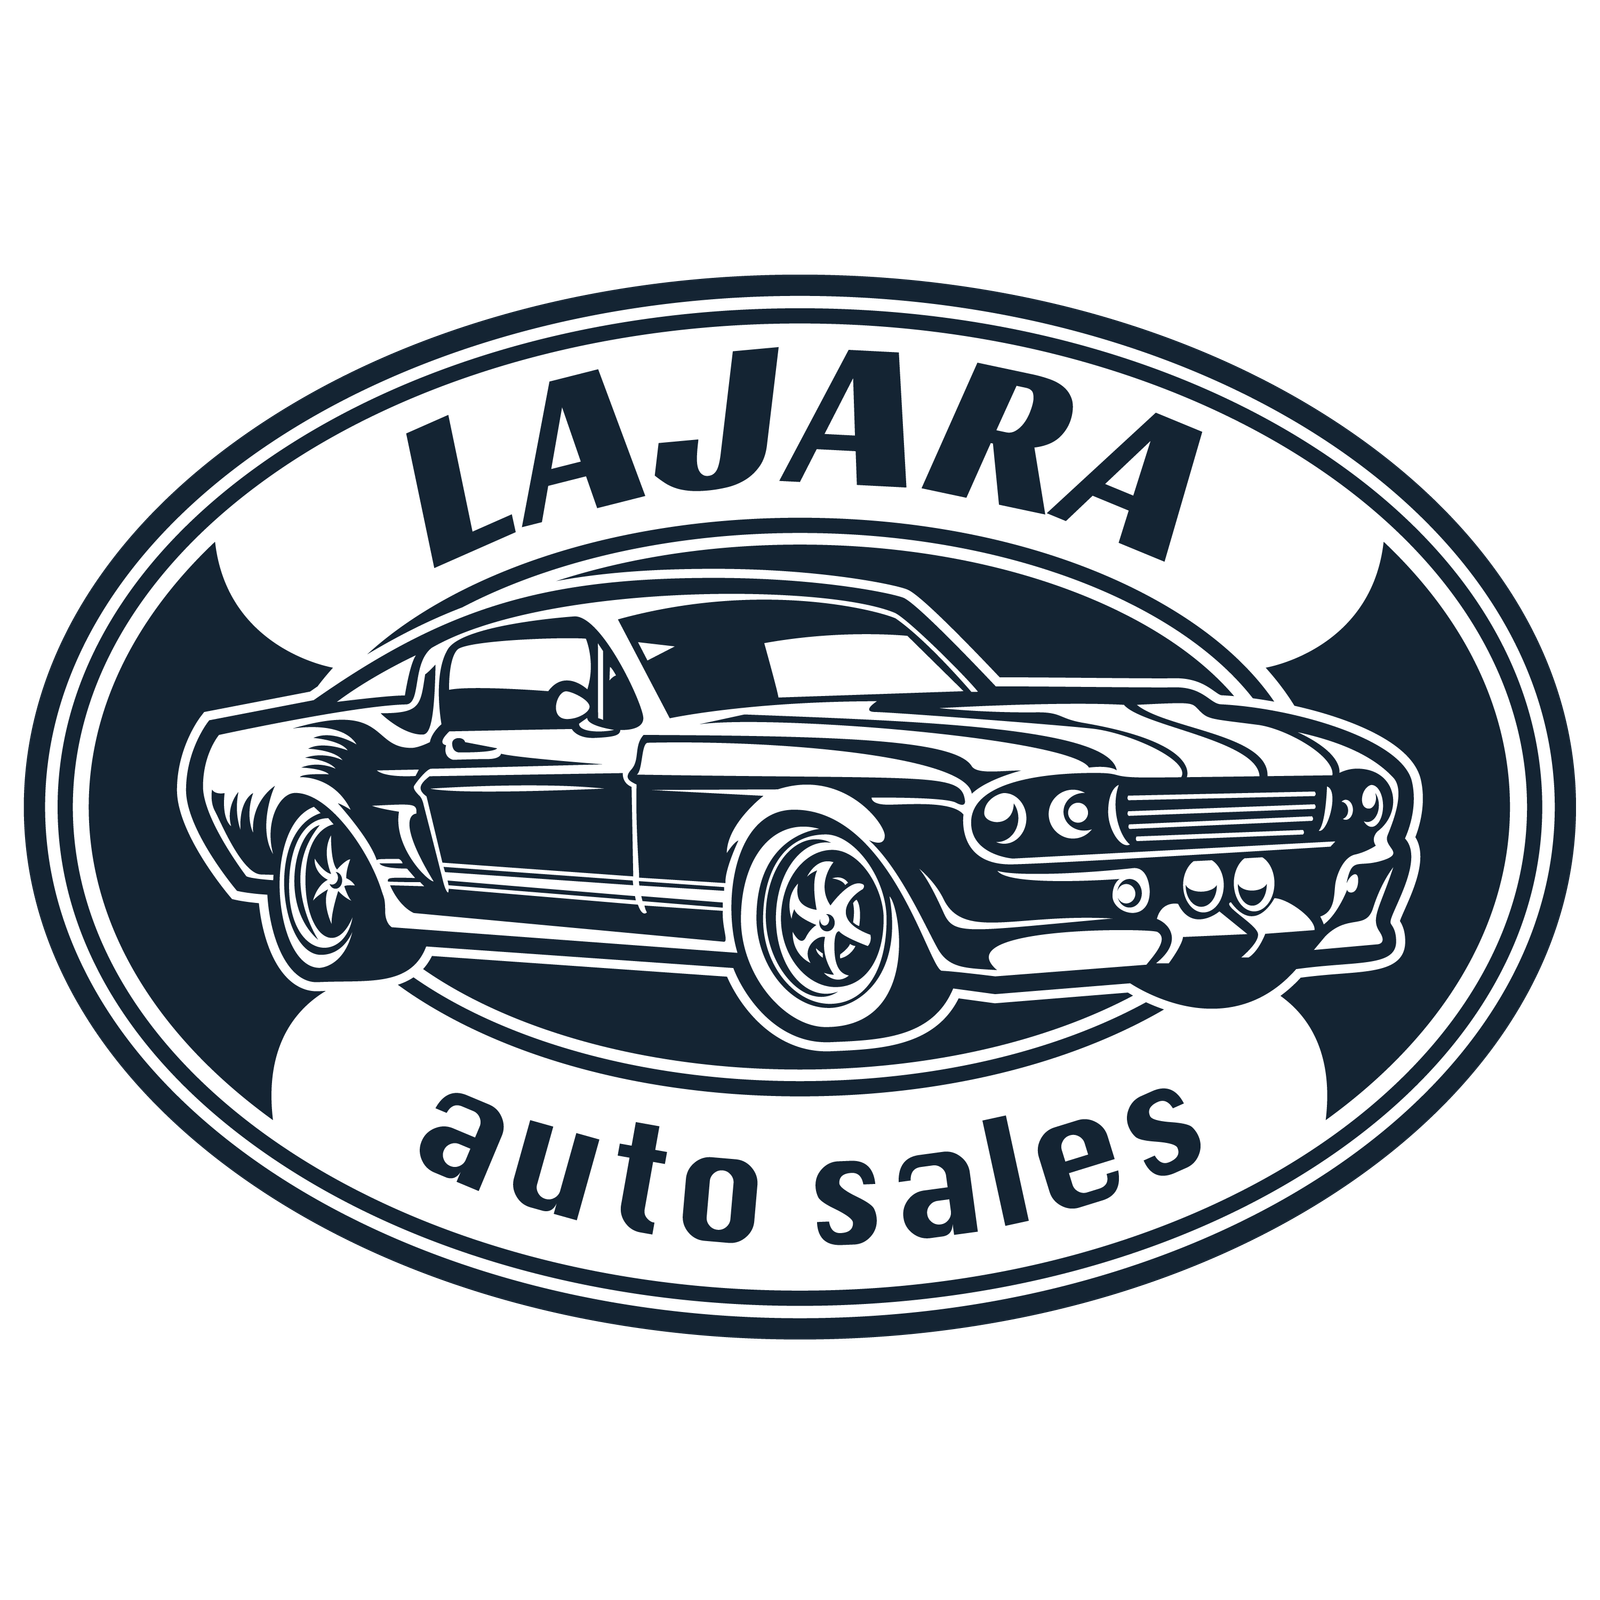 Lajara Auto Sales